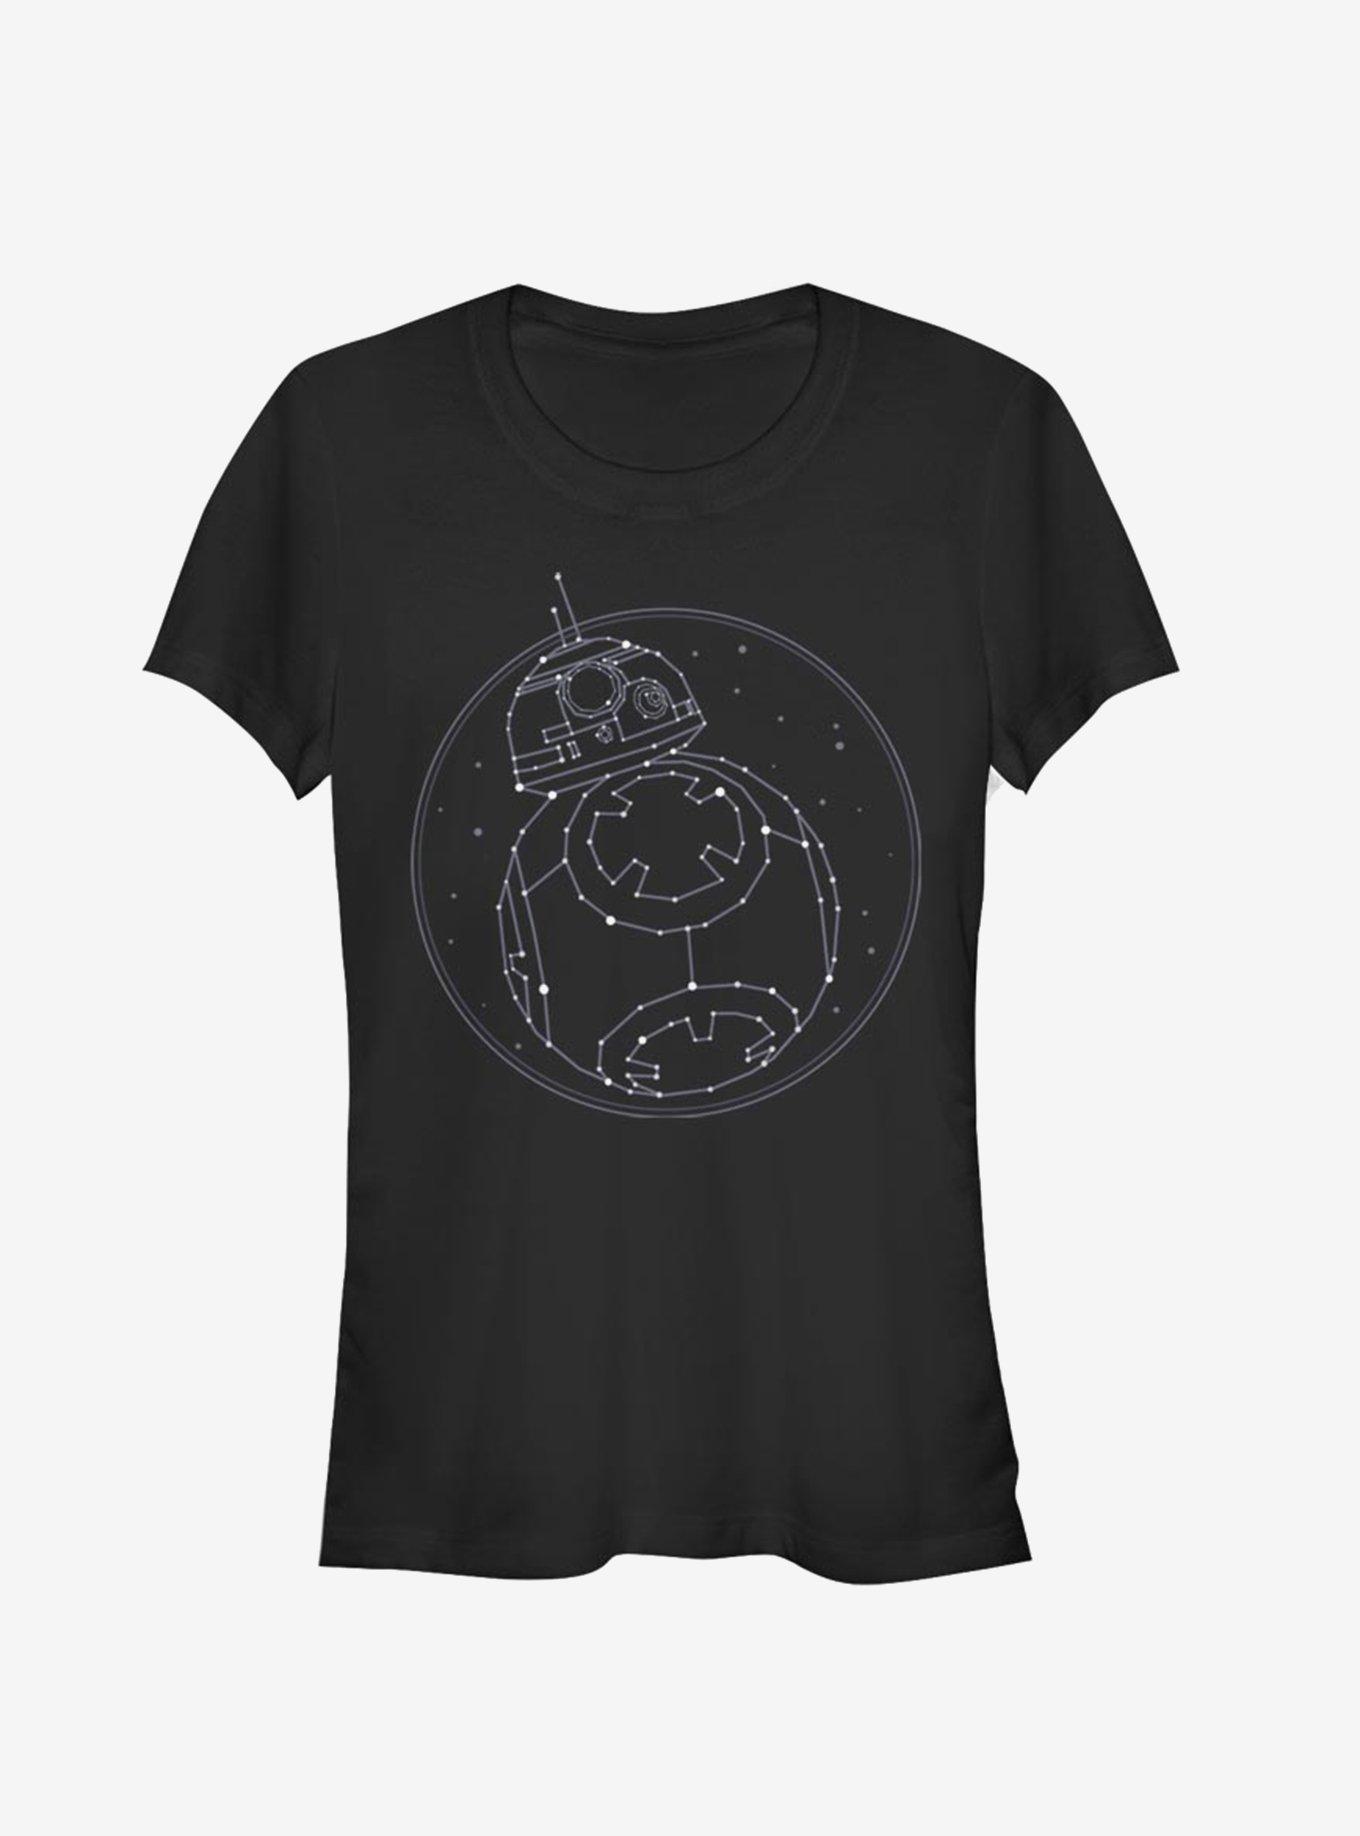 Star Wars Episode IX The Rise Of Skywalker Constellation Girls T-Shirt, BLACK, hi-res